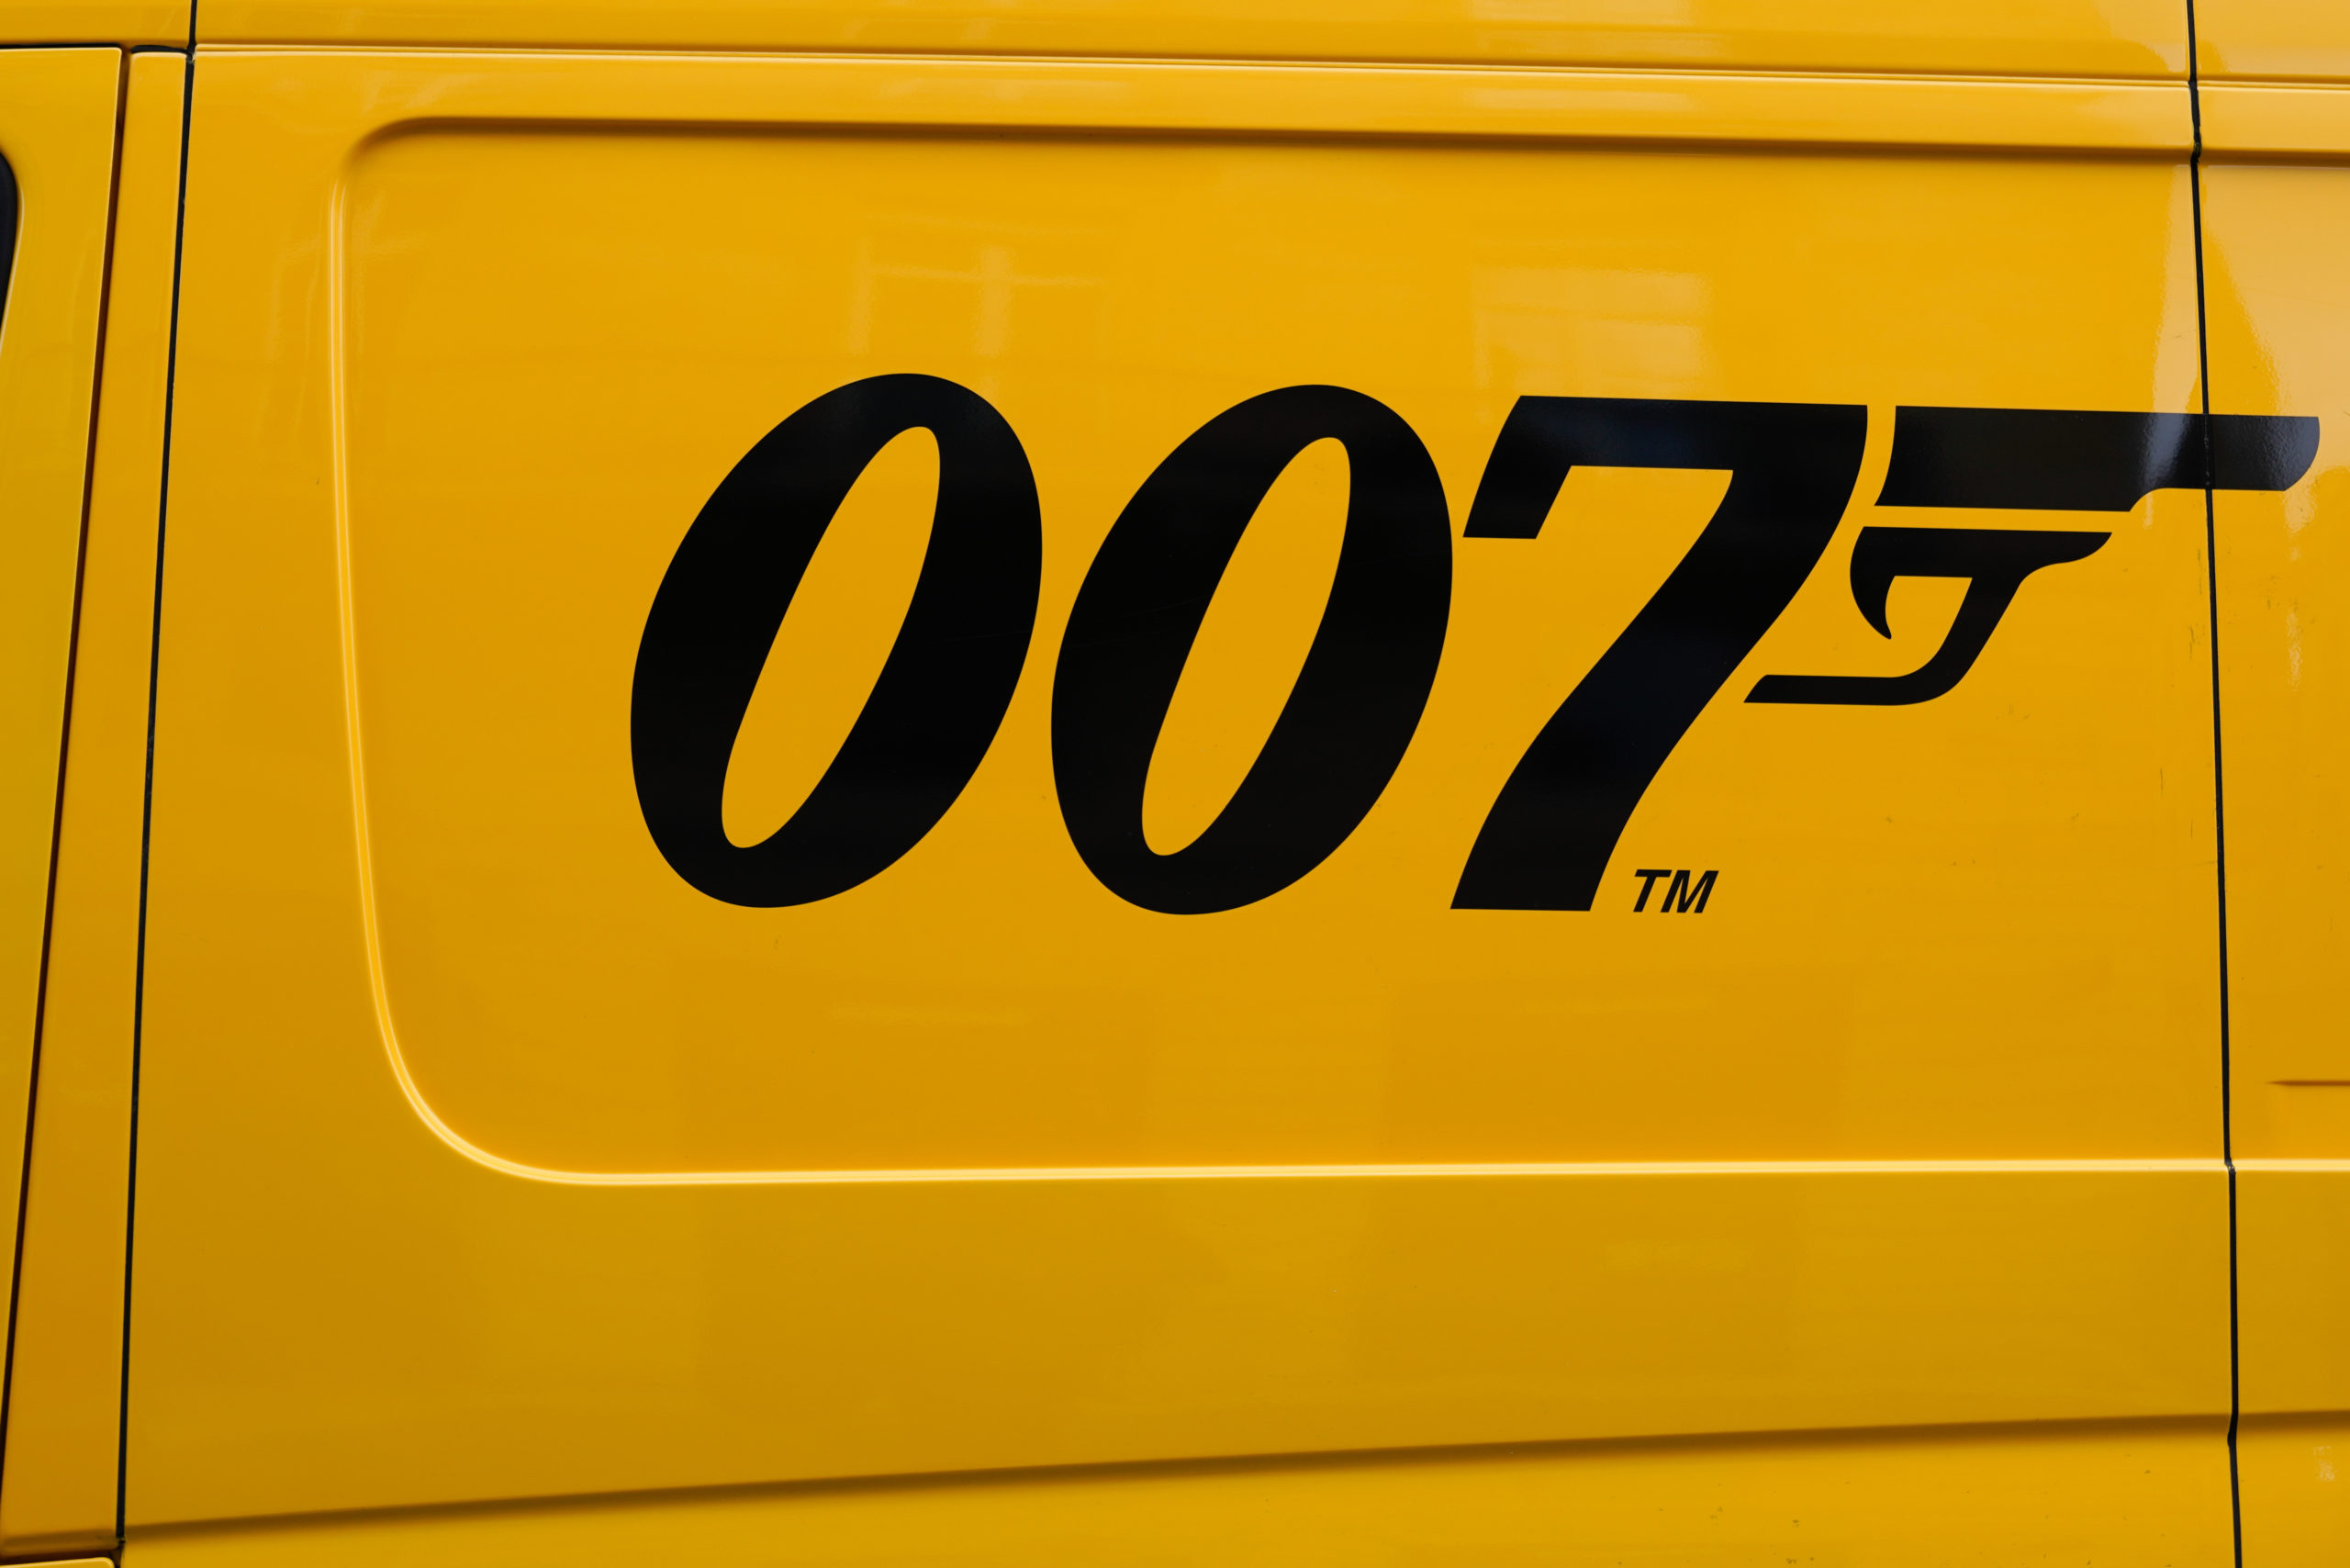 Agent logo 007 free image download